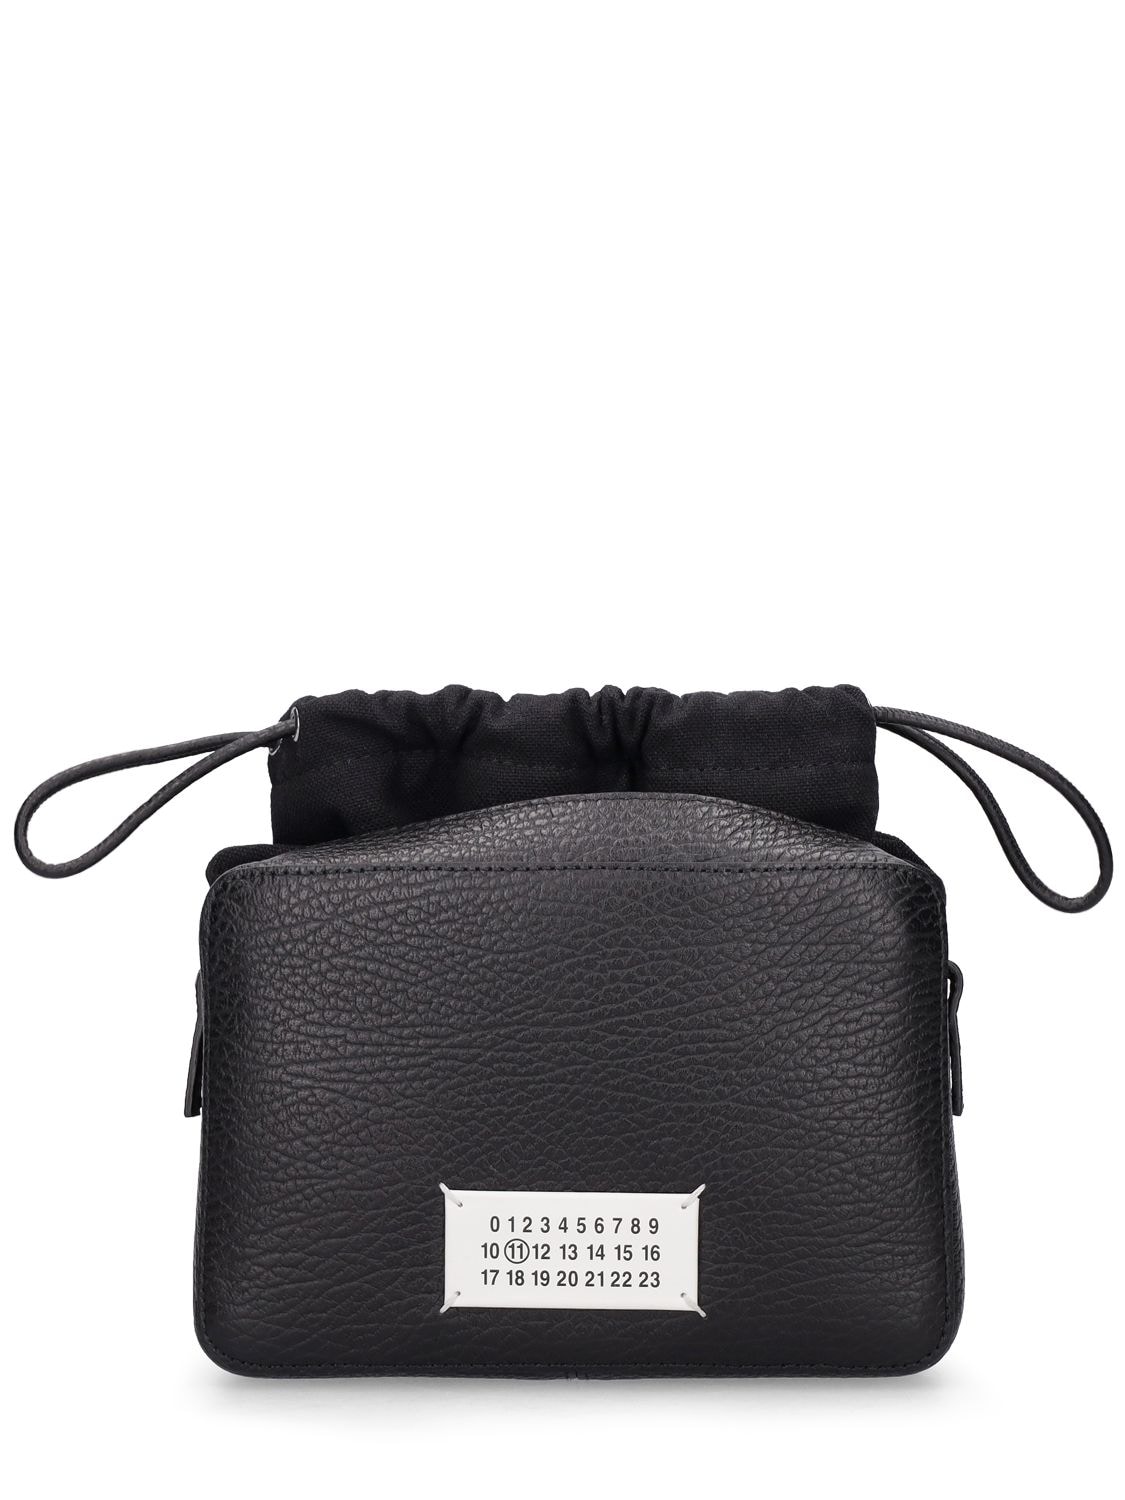 Image of Medium Grainy Leather Camera Bag